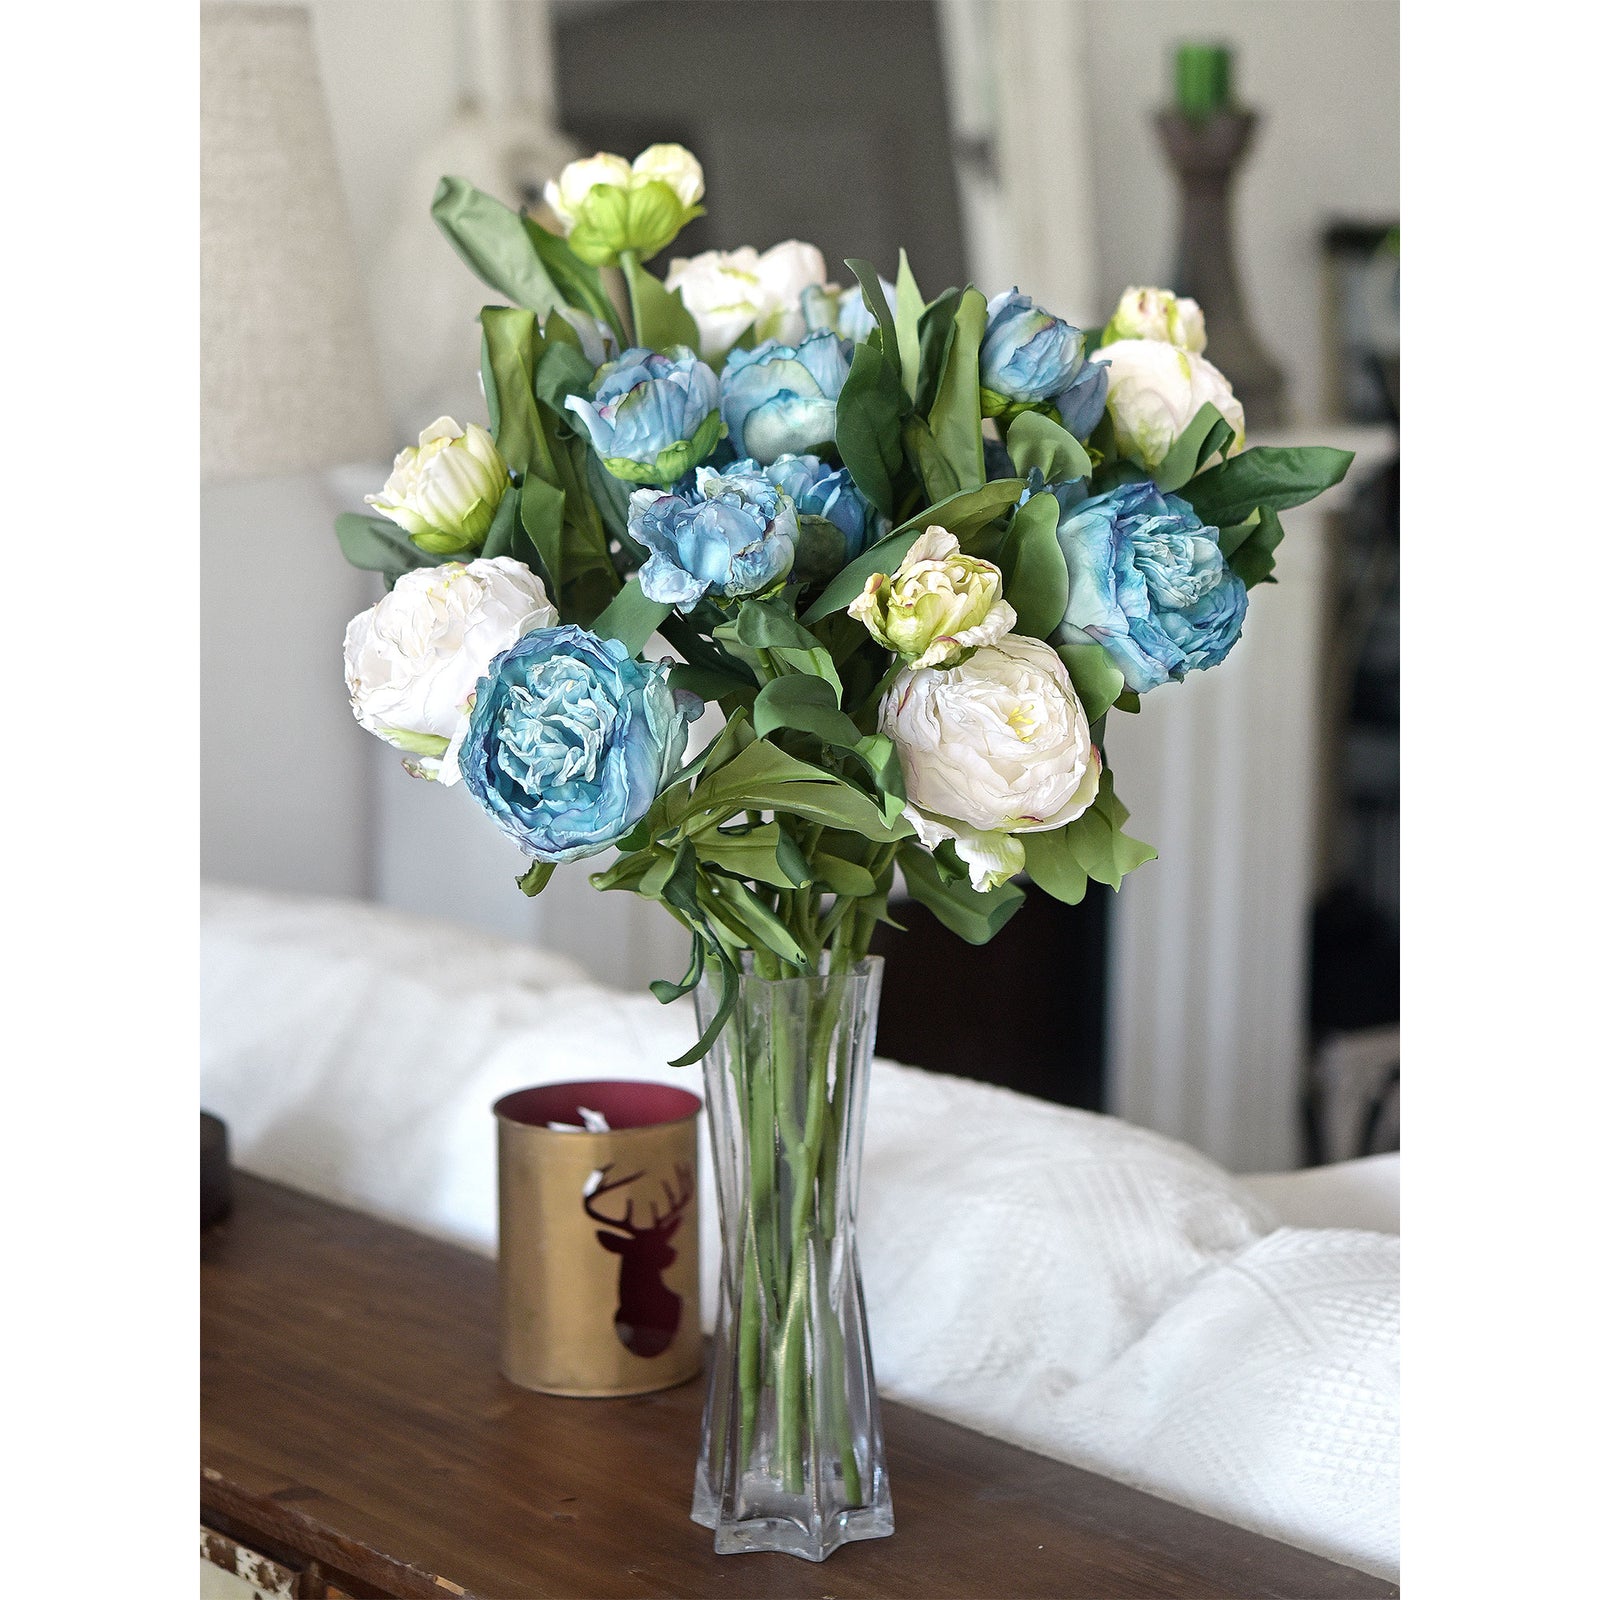 Dusty Blue Nostalgic Sentimental Rustic Vintage Silk Peony Artificial Flower Bouquet 6 Stems